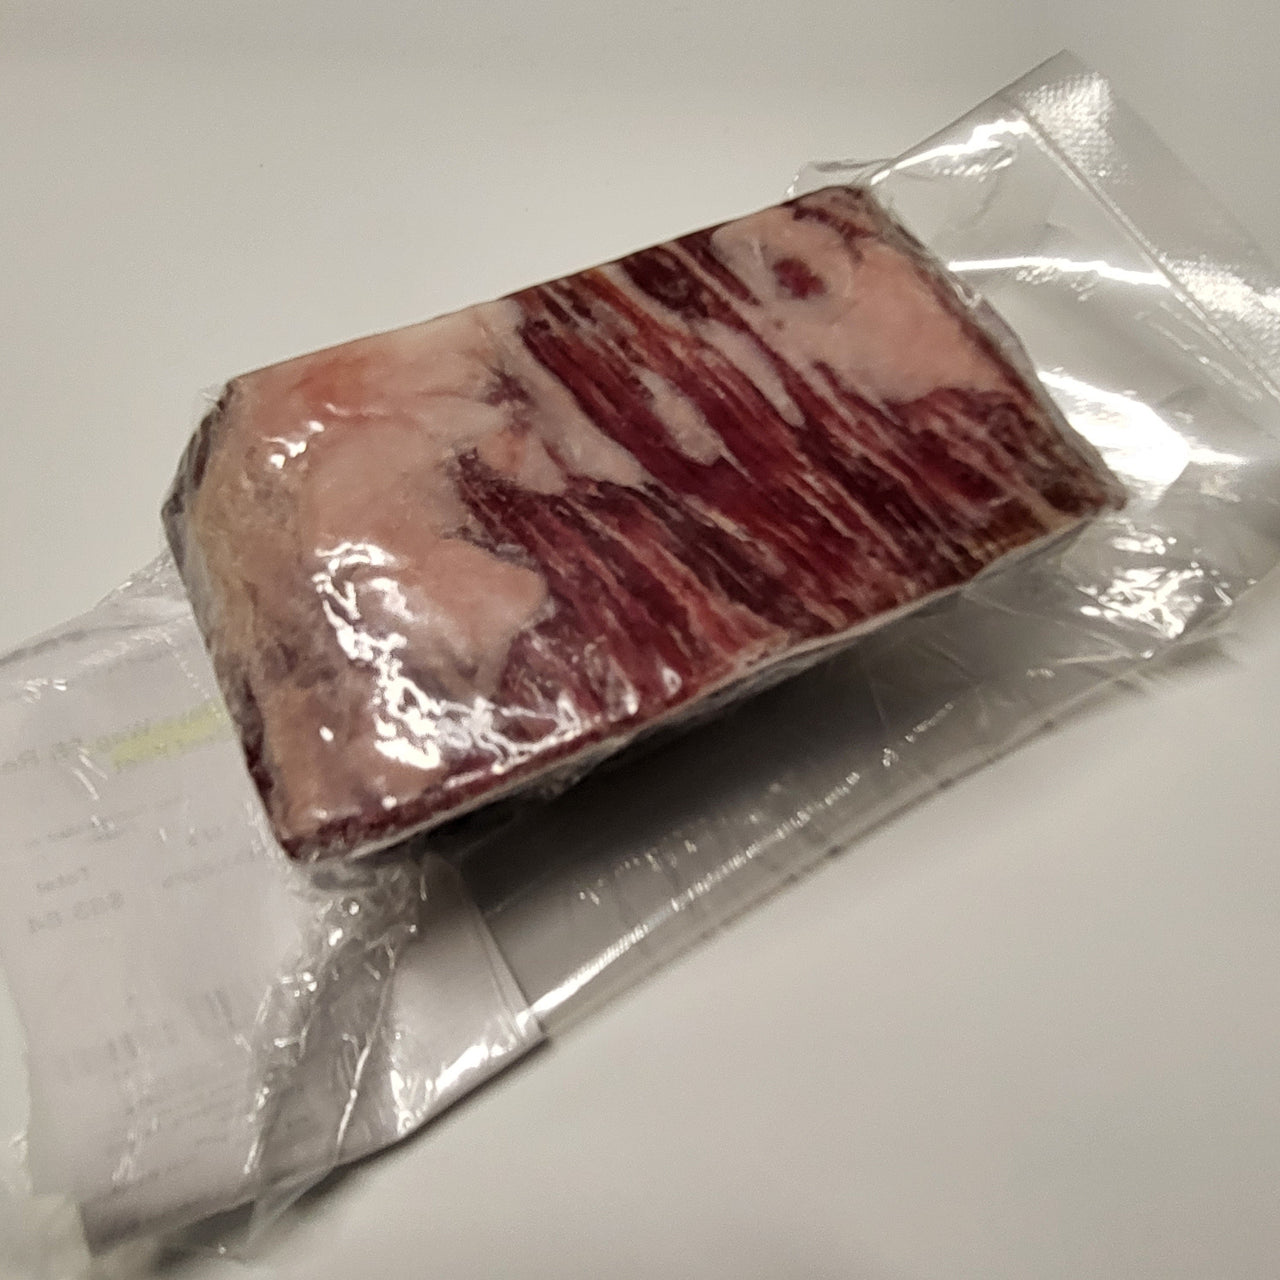 Grass Fed Grass Finished Beef Filet Steak 8oz Japanese Akaushi (Brown aka: Red) Wagyu Beef Full Blood AGED 21+ Days